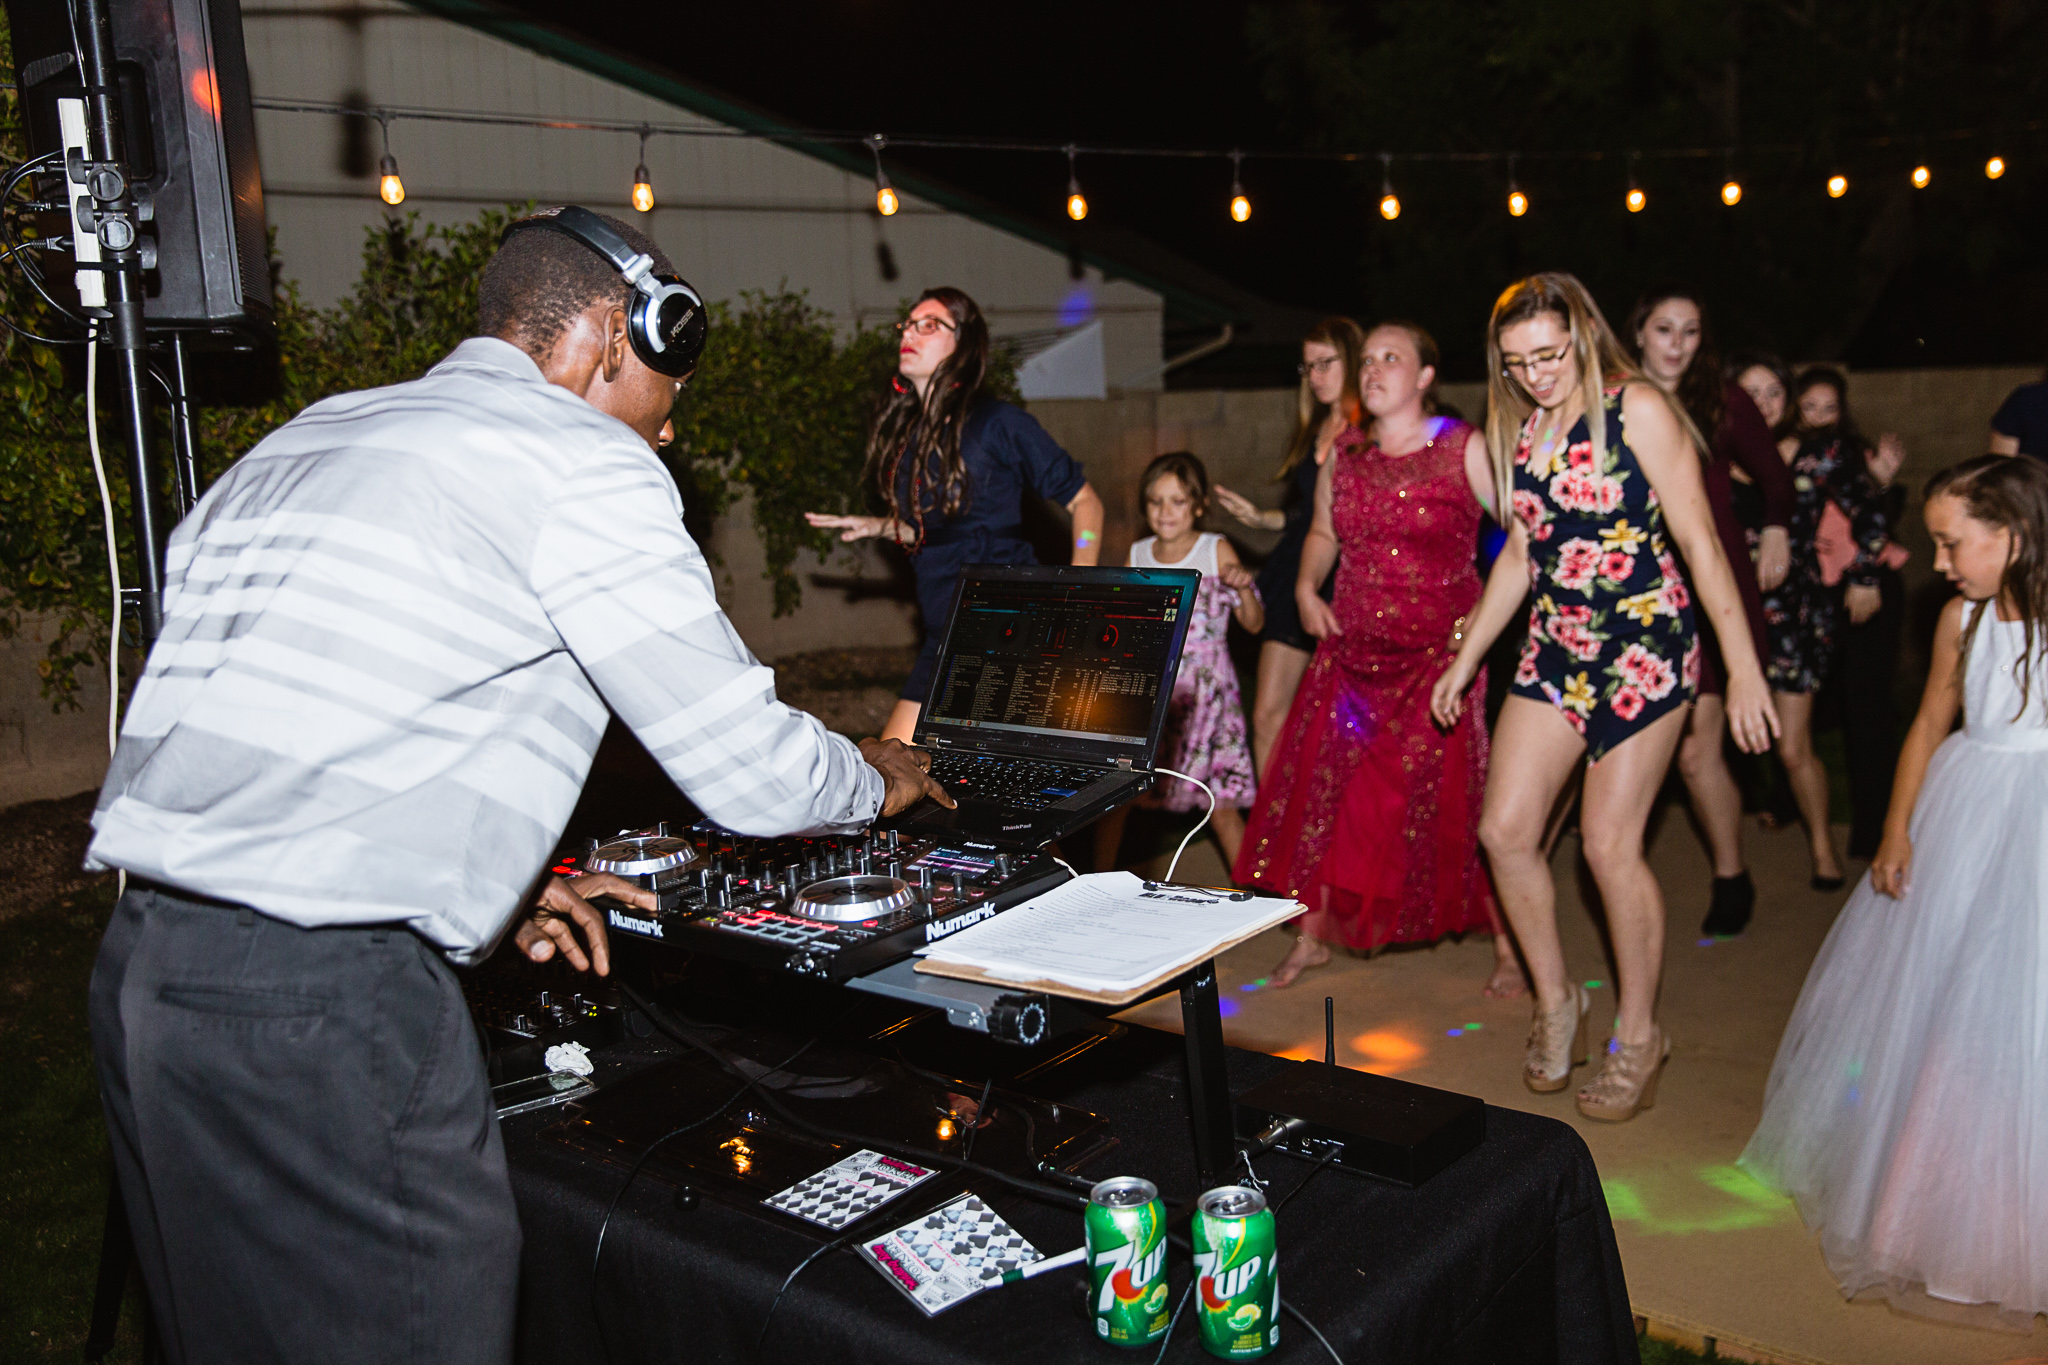 Guests dancing at backyard garden wedding in front of DJ booth.